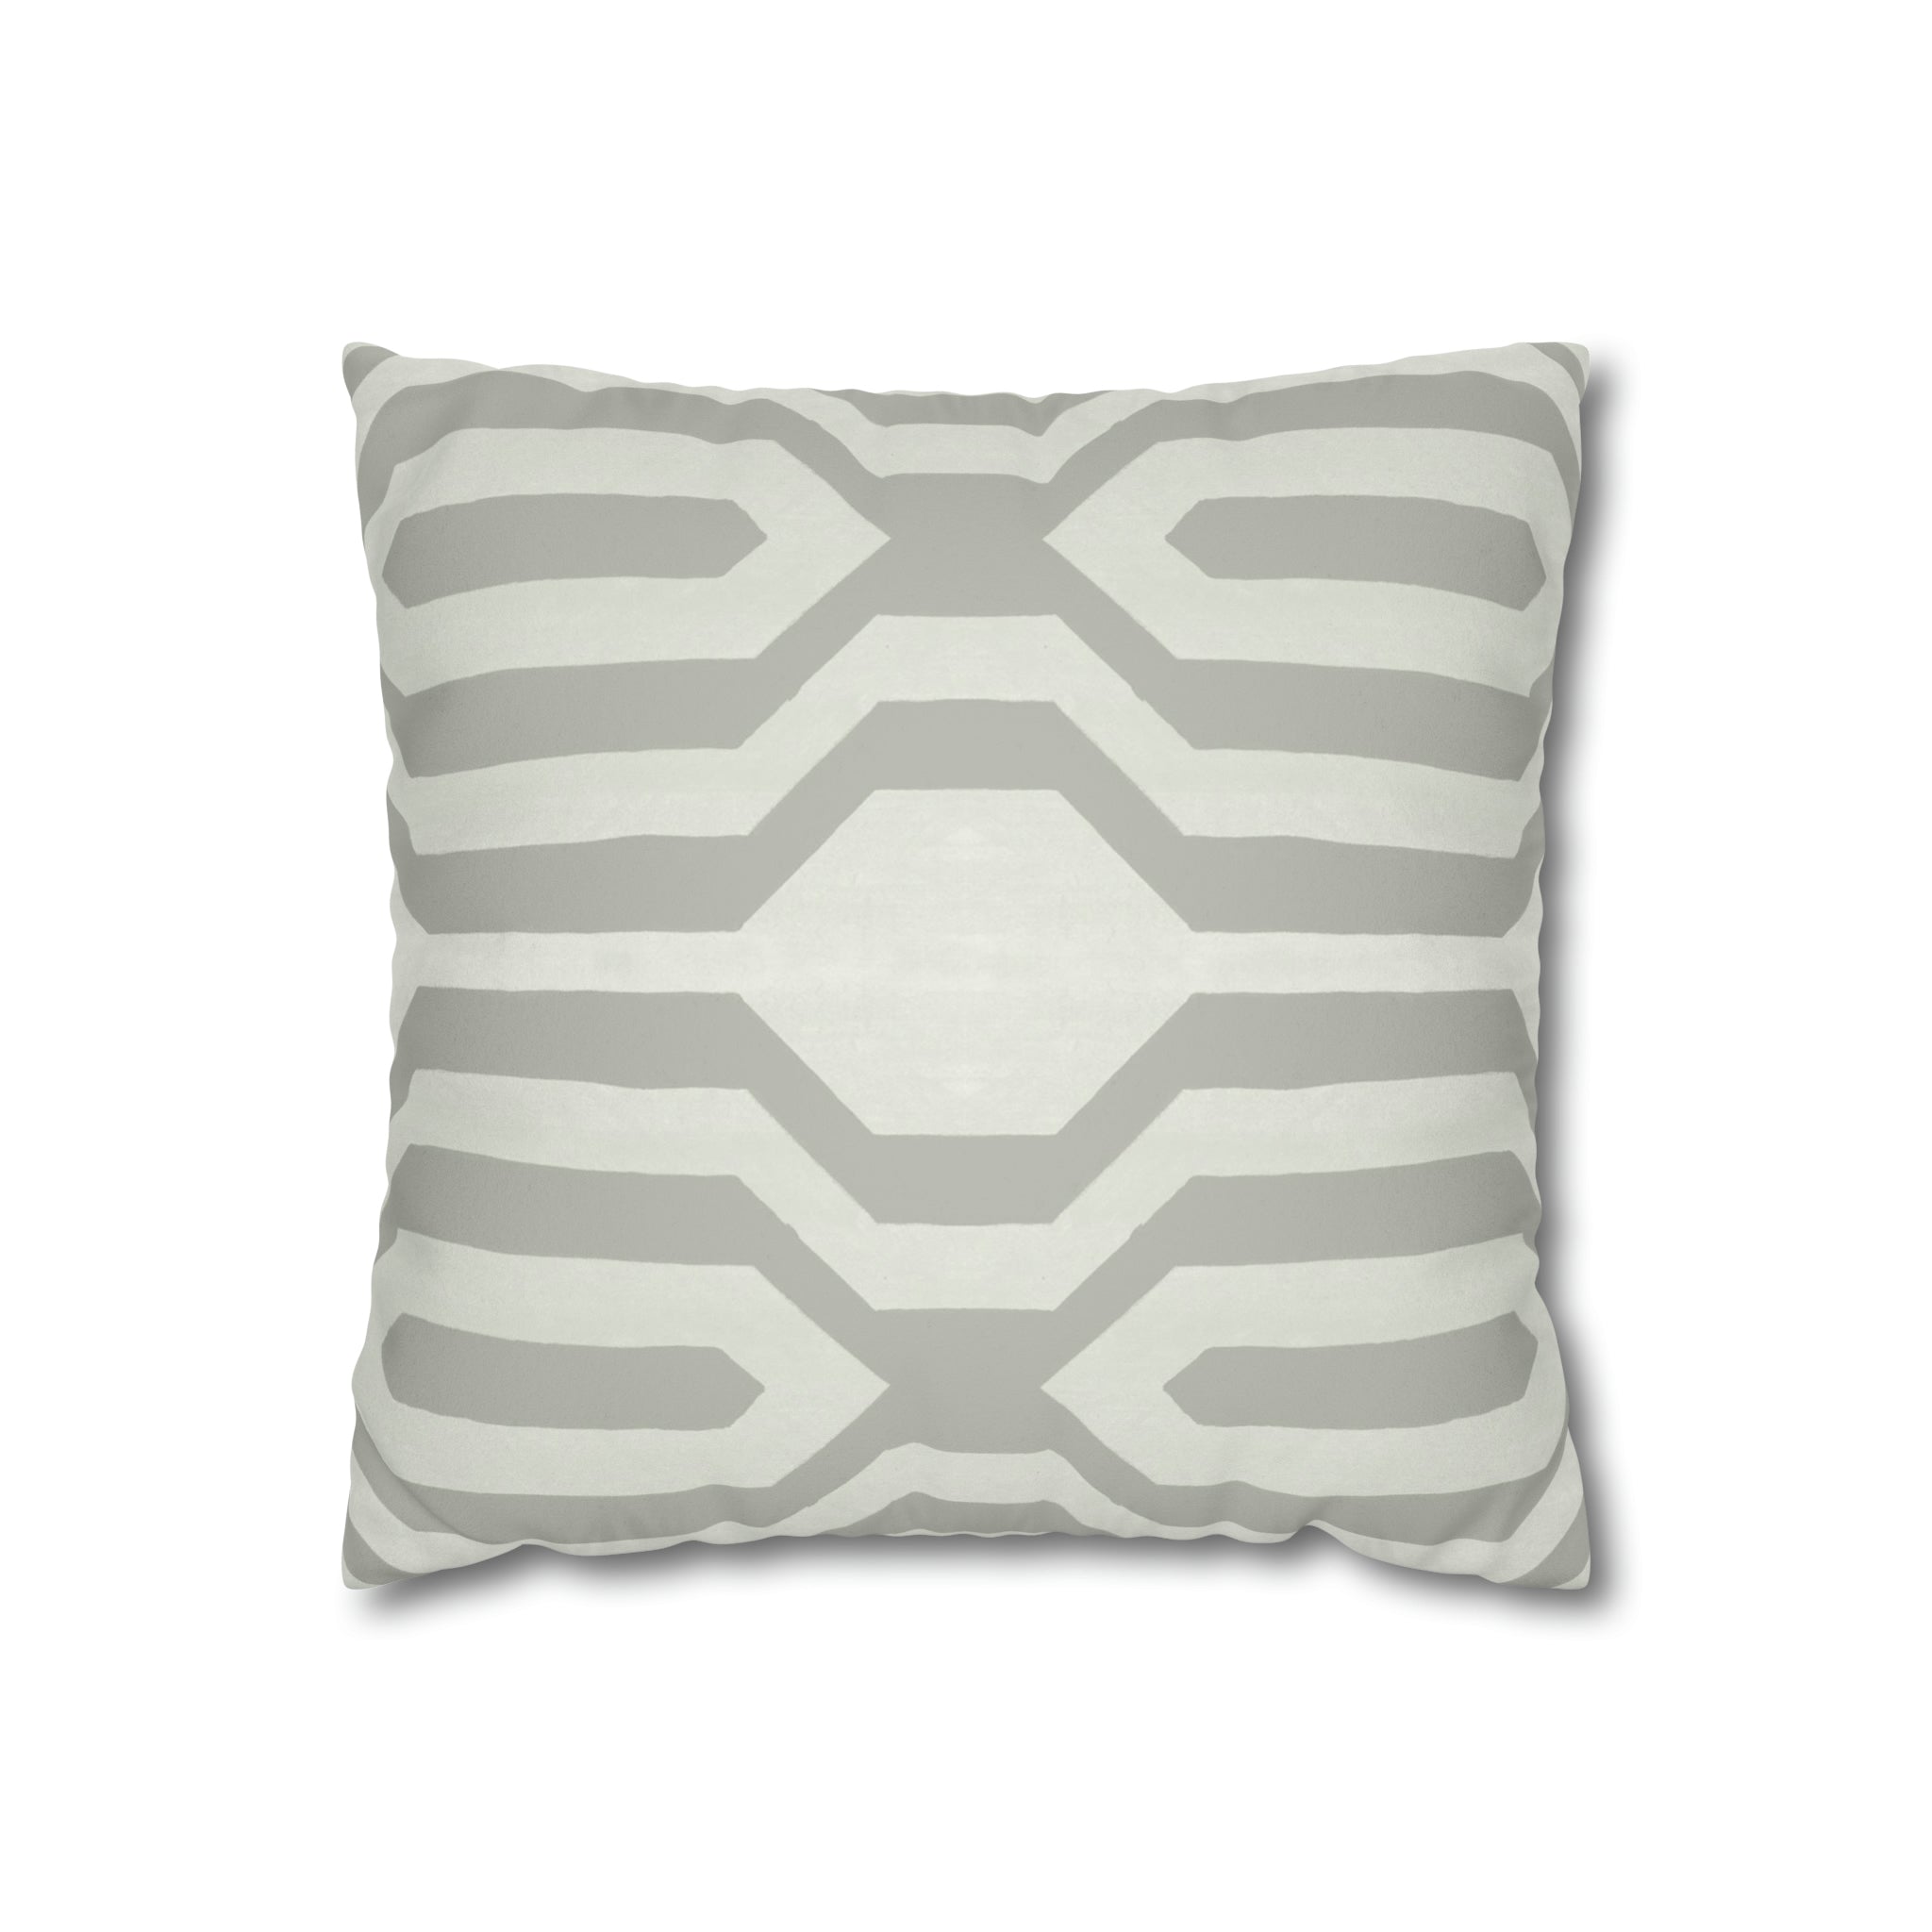 Lariat Microsuede Square Pillow Cover